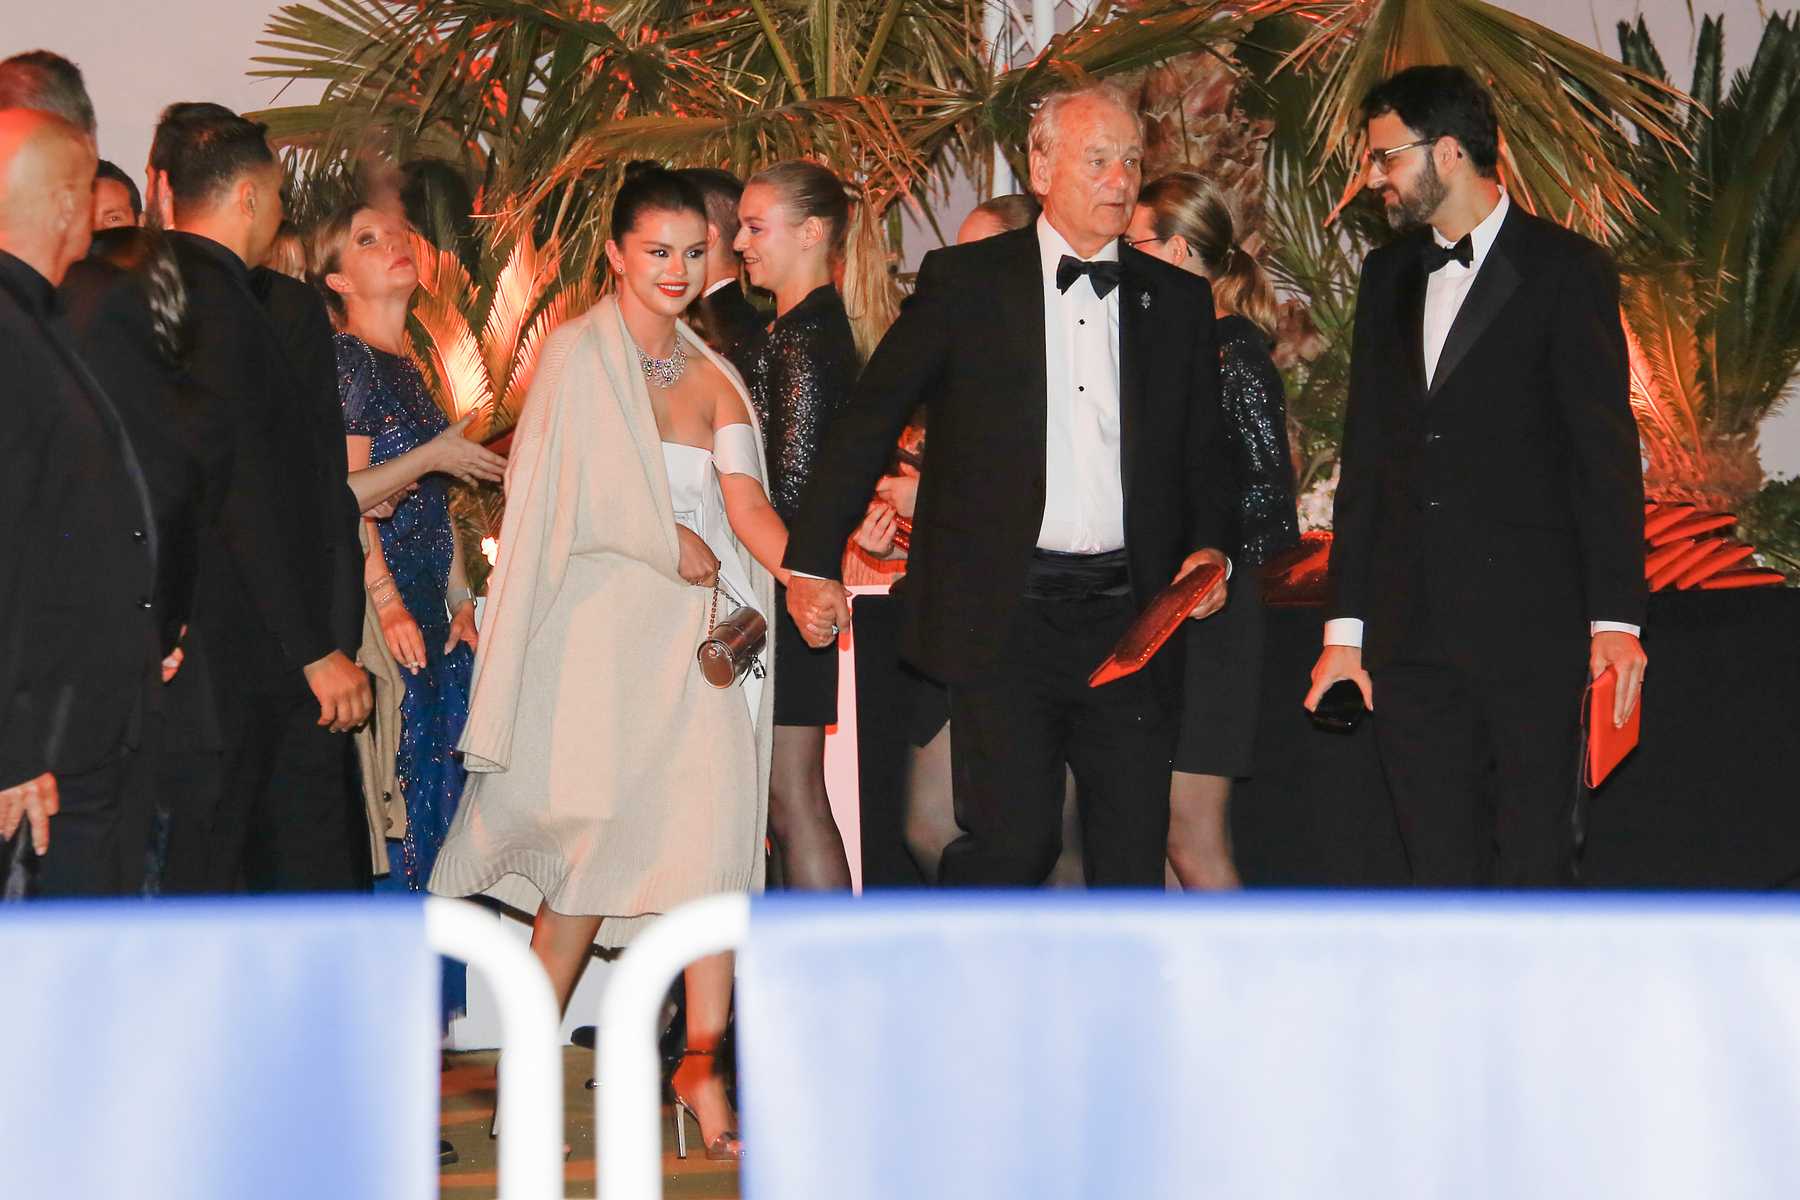 Selena_Gomez_-_Leaving_Agora_Restaurant_With_Bill_Murray_during_Cannes_Film_Festival2C_05142019-02.jpg